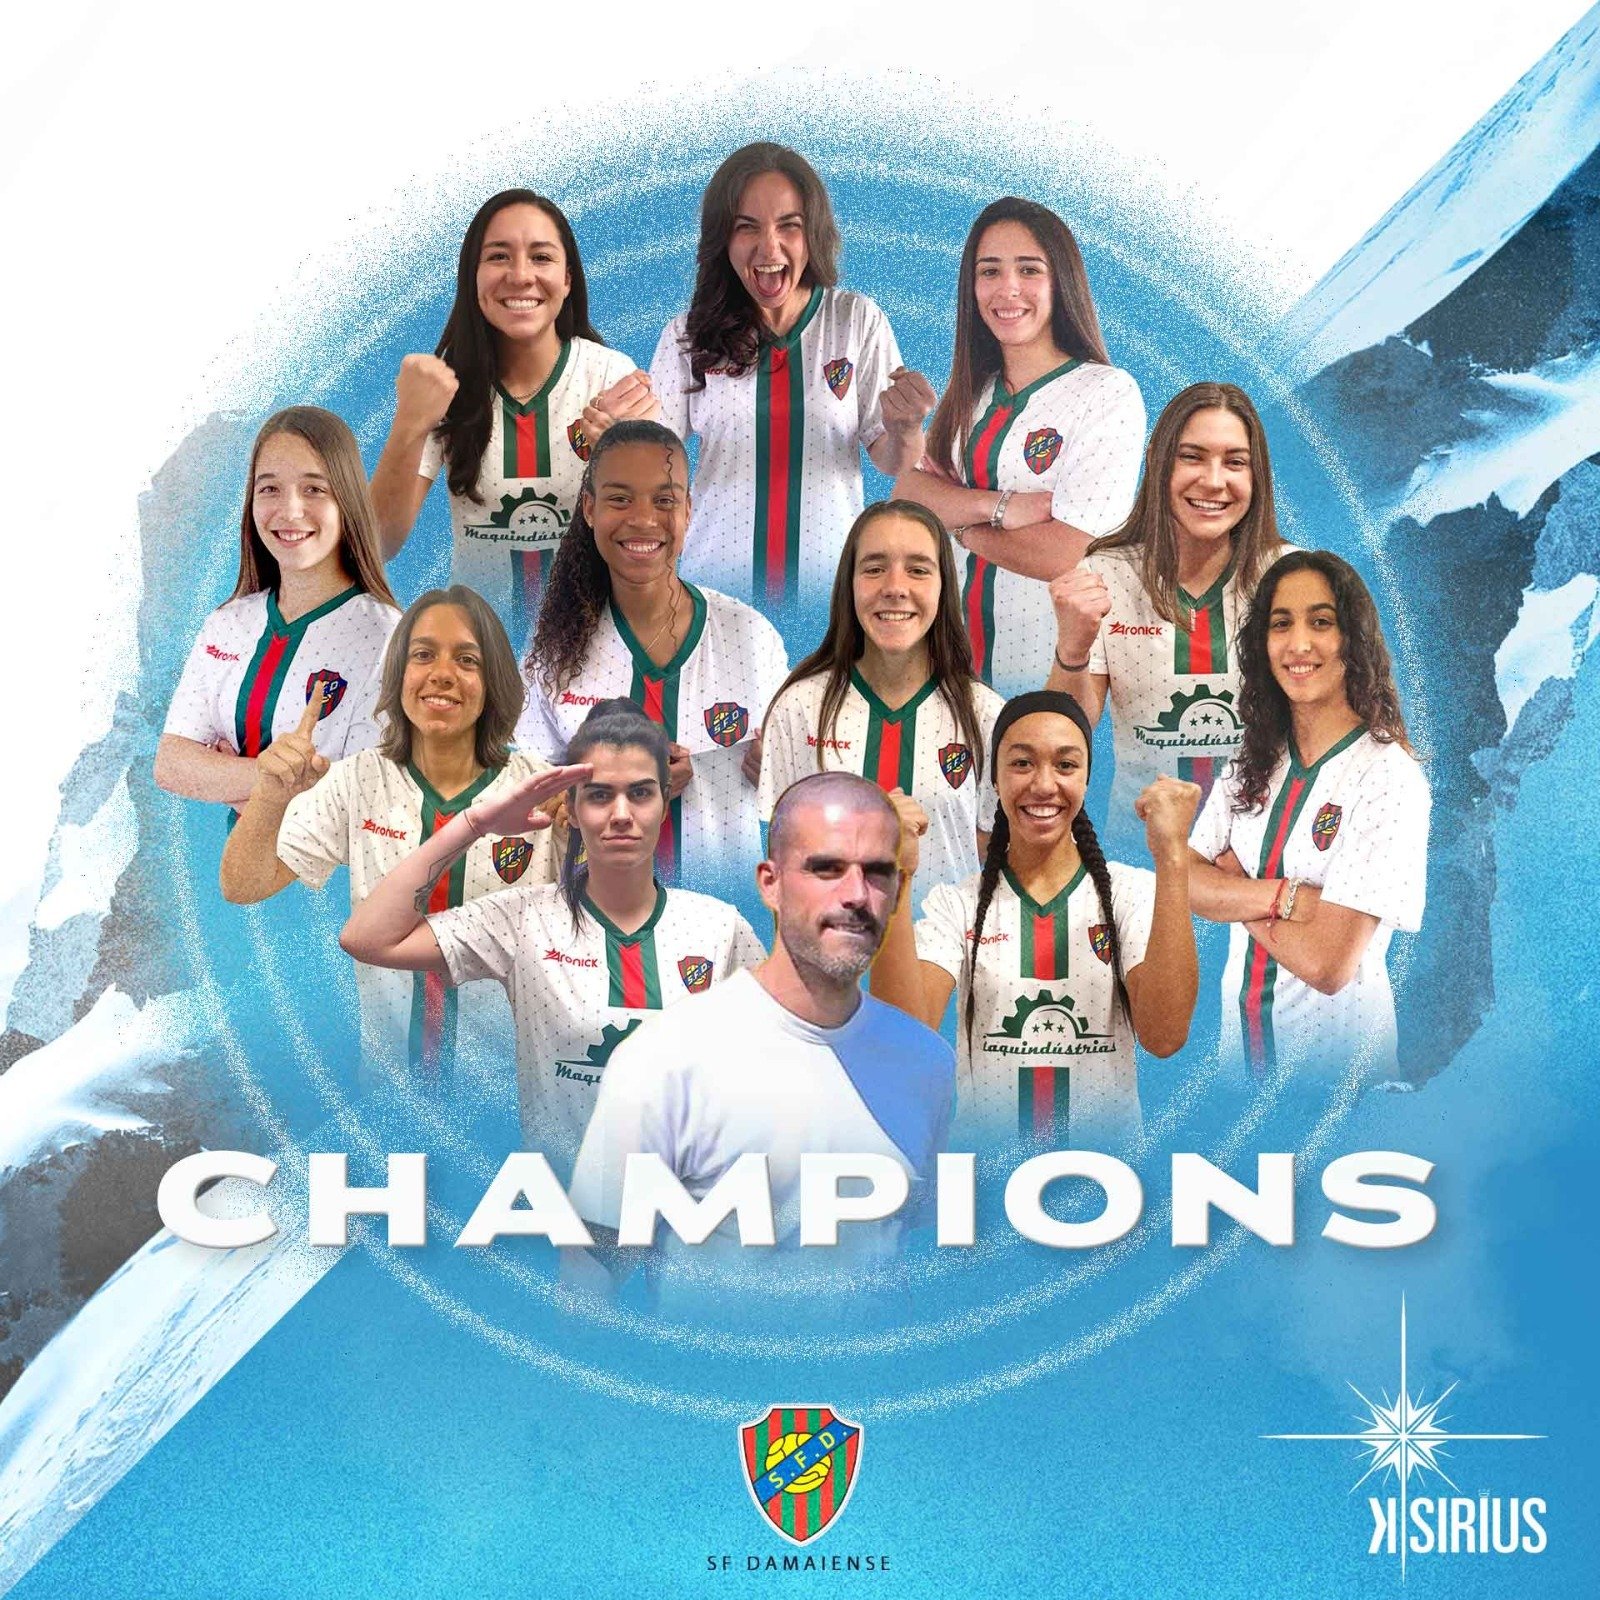 Champions: SF Damaiense